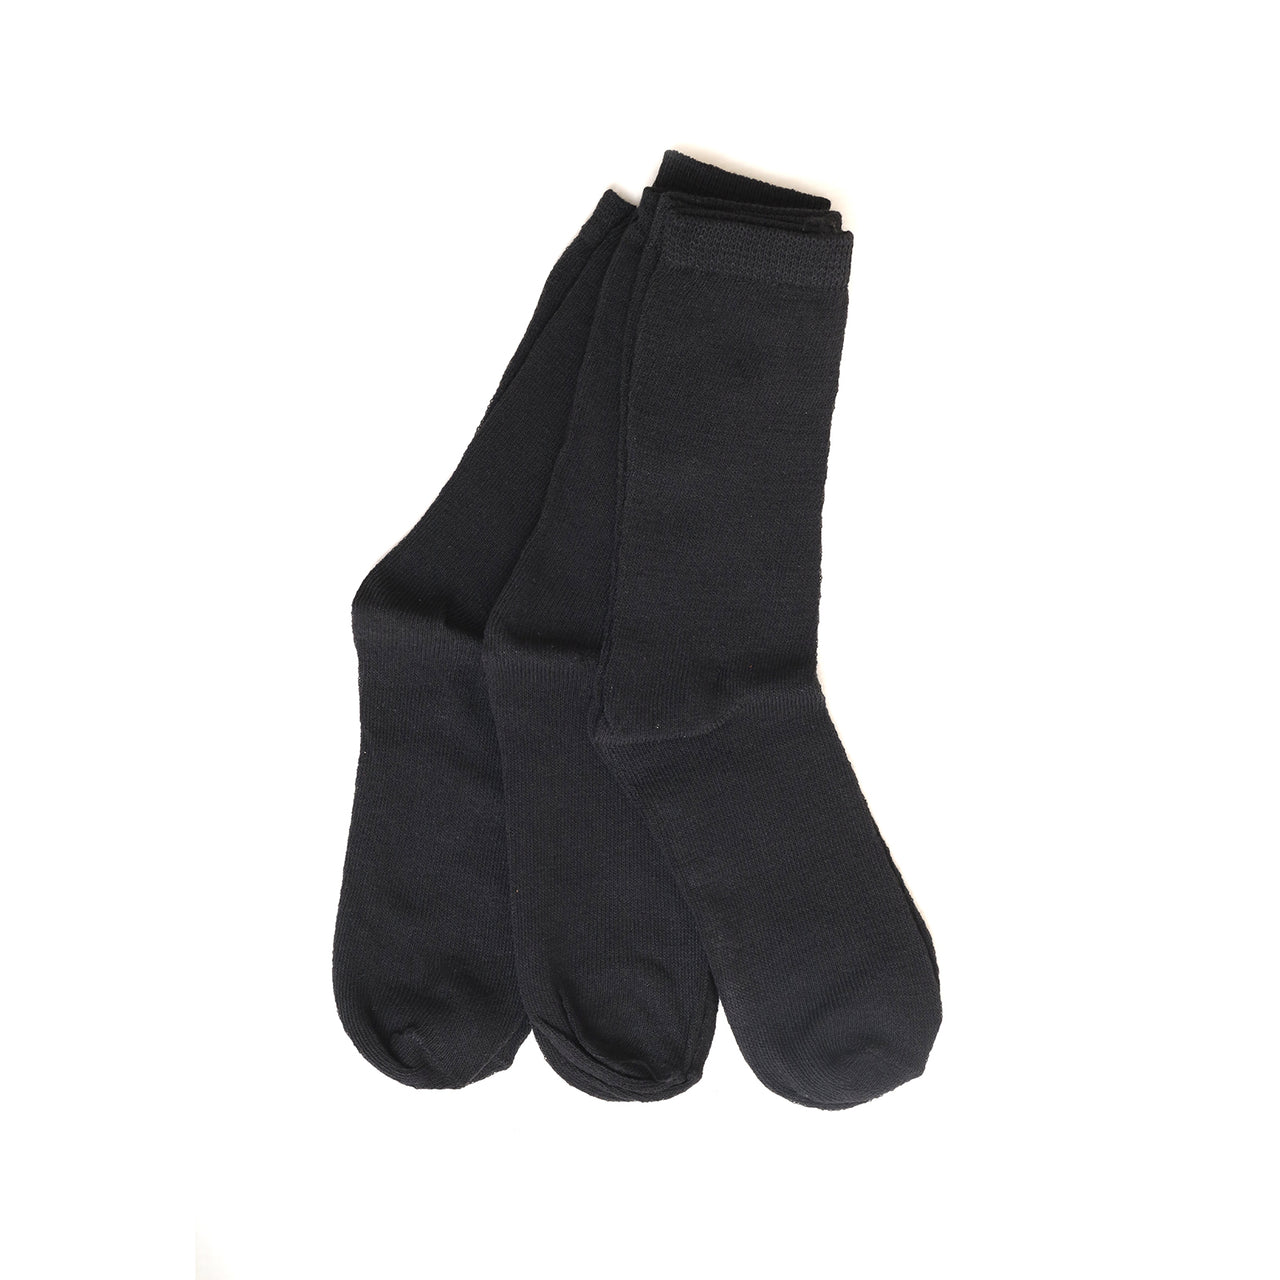 A-SB-0300205- Socks